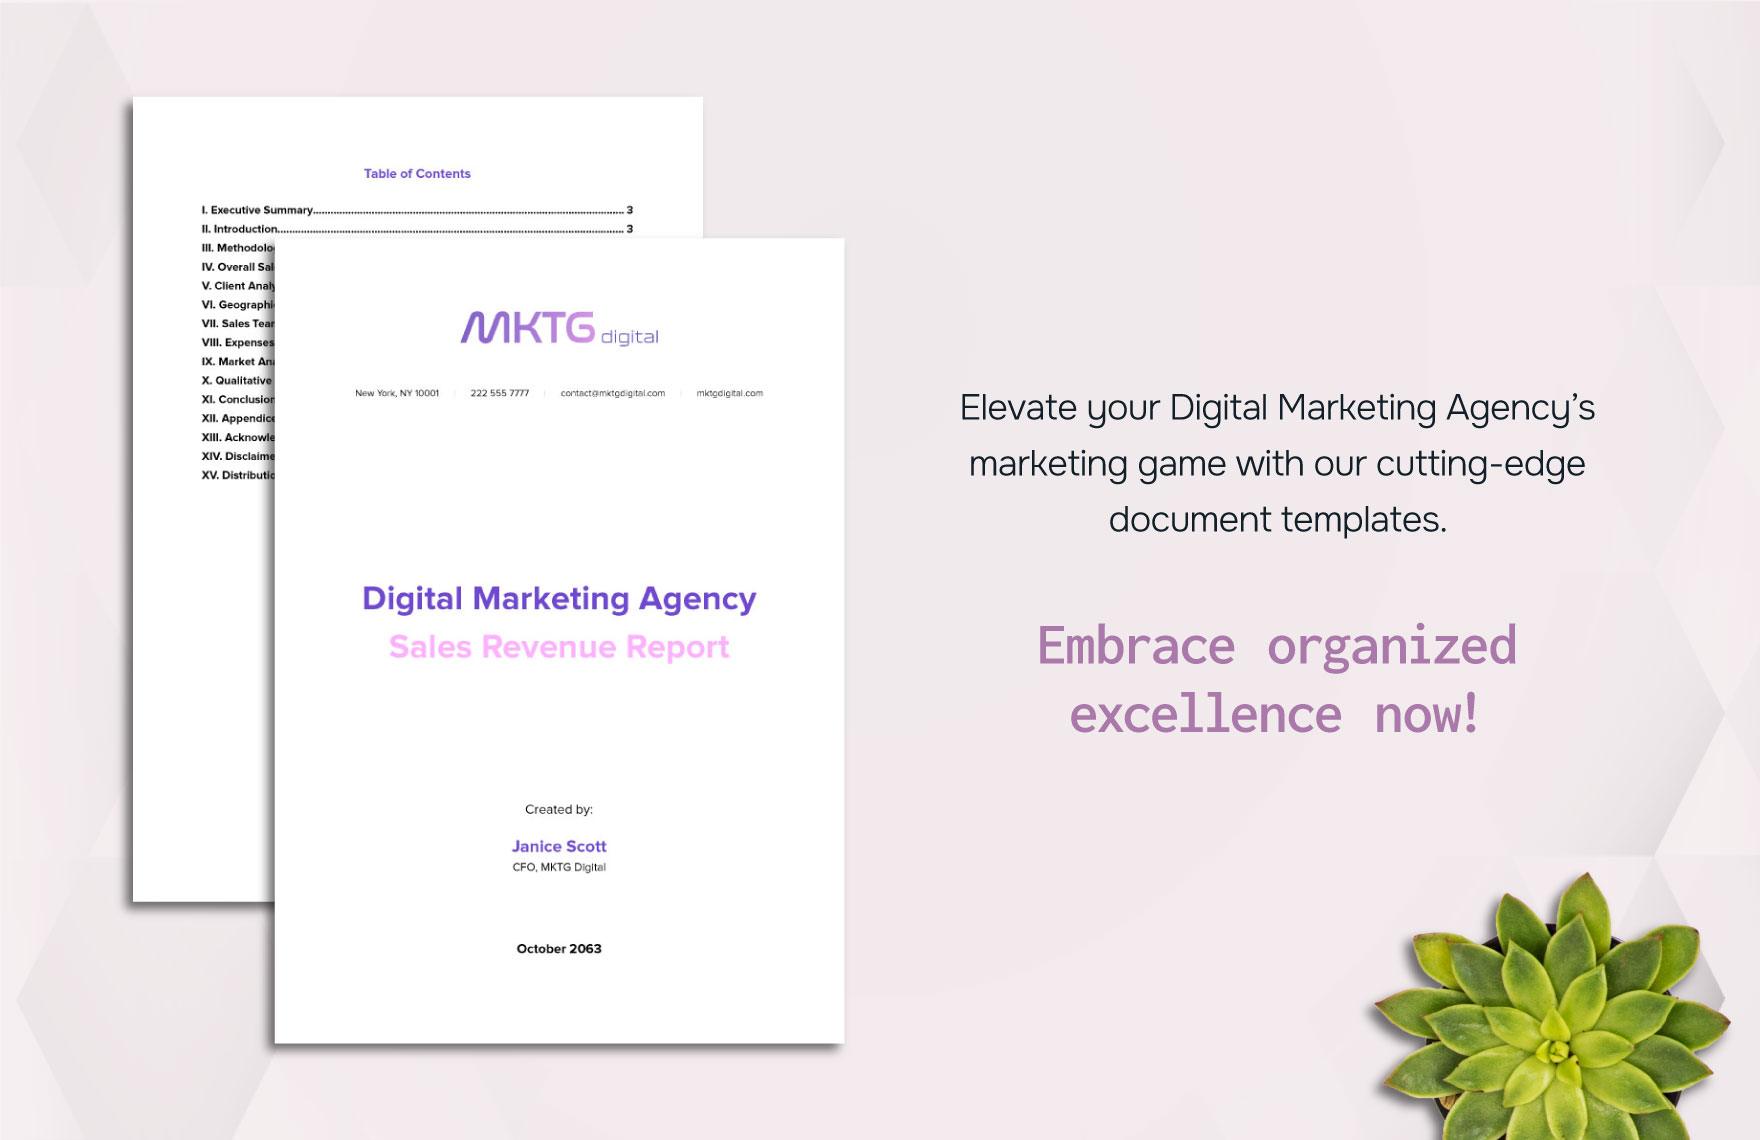 Digital Marketing Agency Sales Revenue Report Template